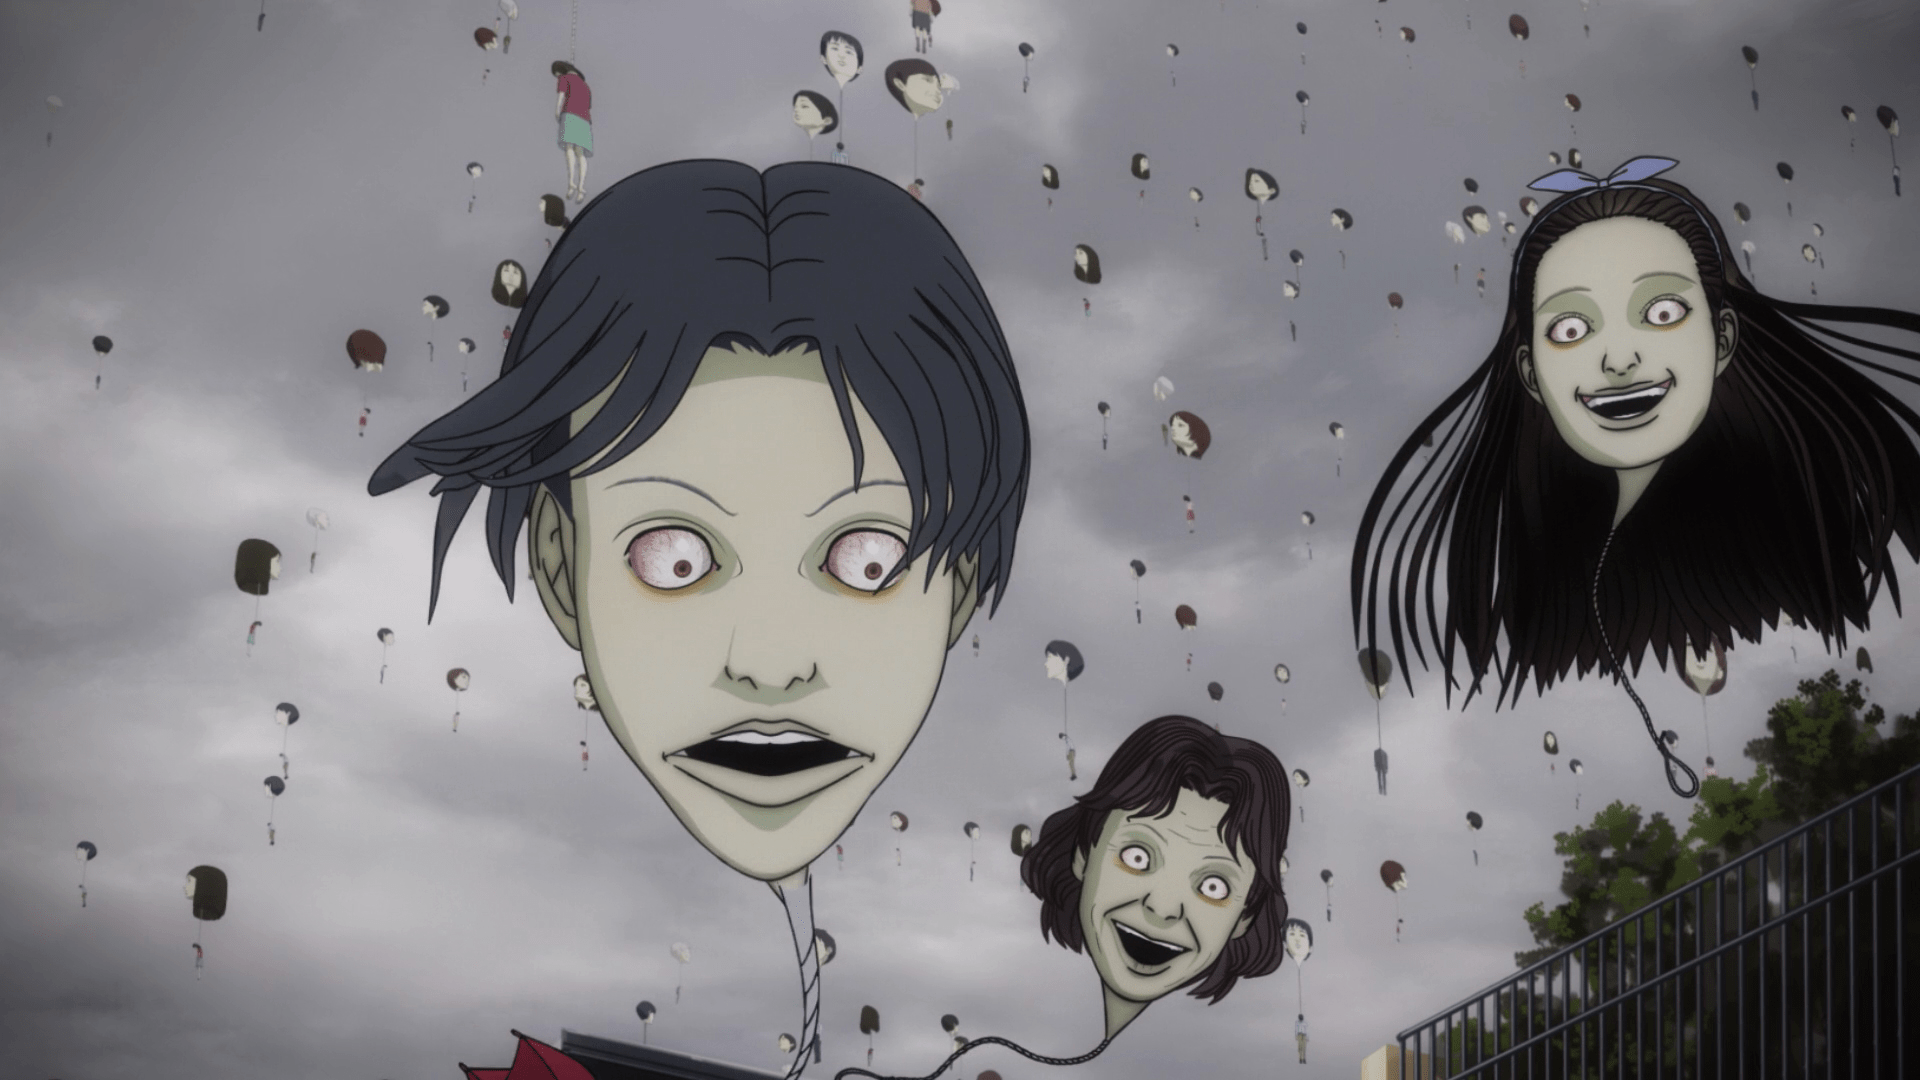 Junji Ito Maniac: Tales of the Macabre